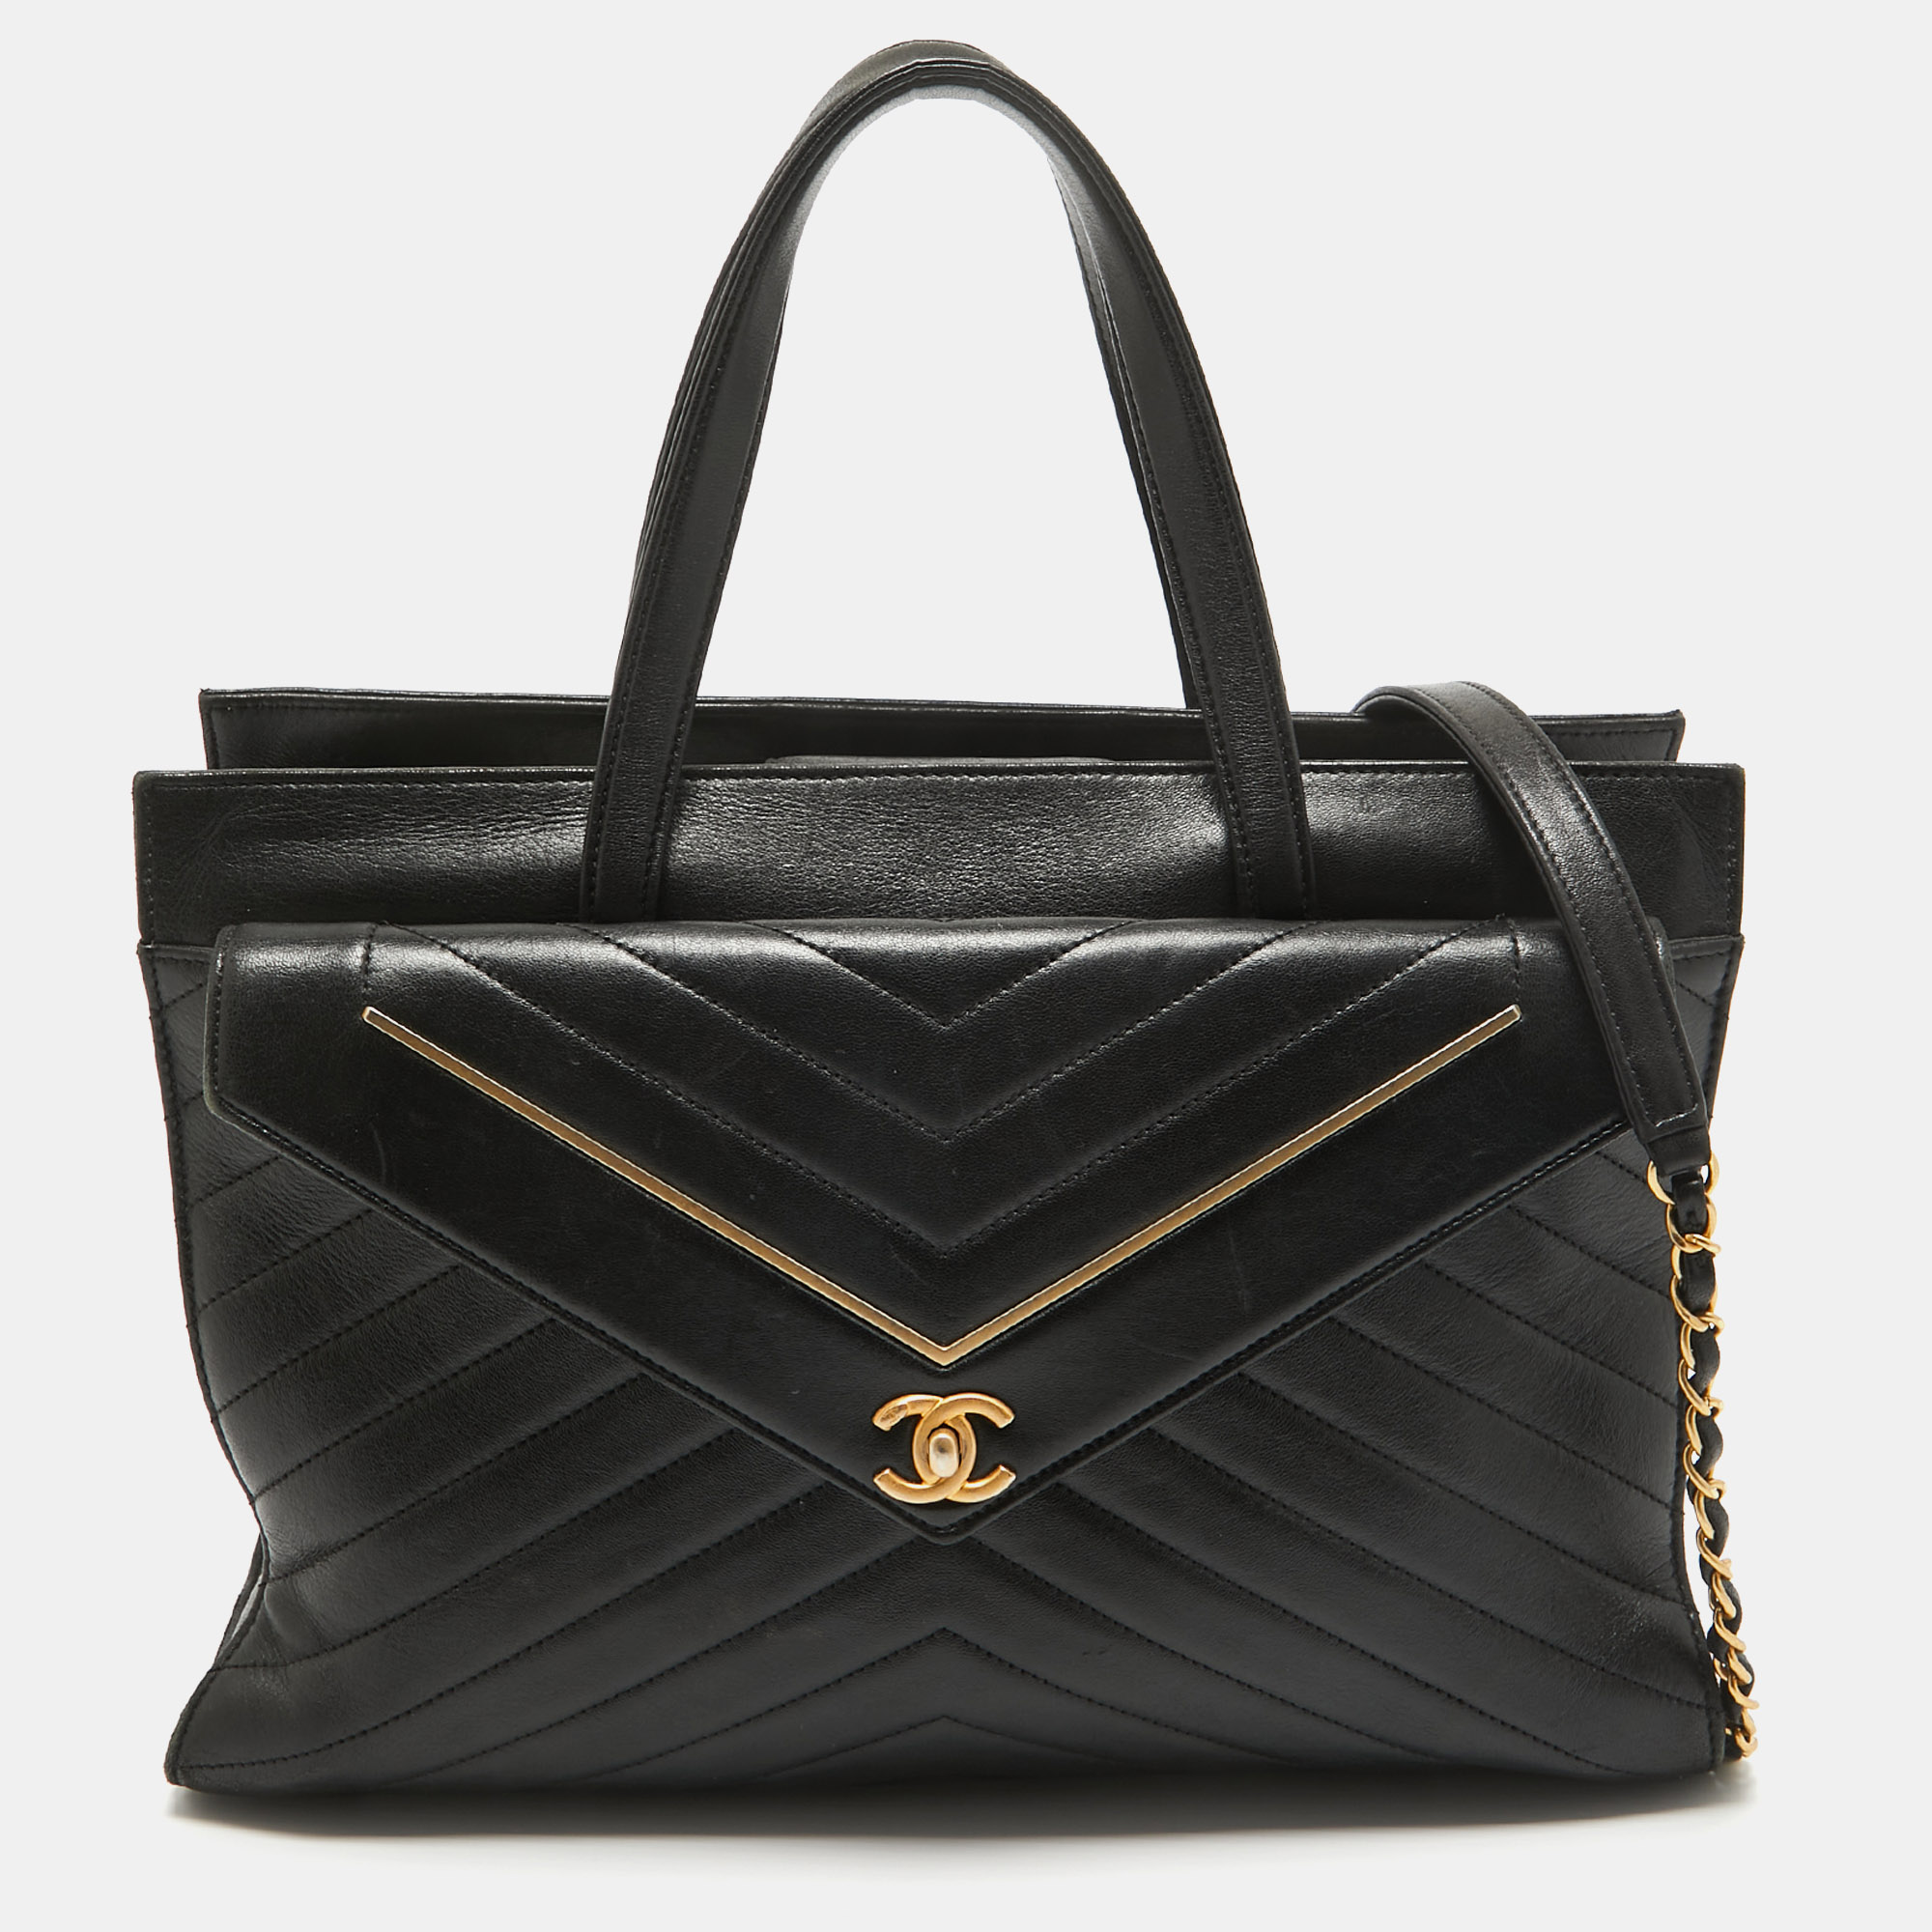 Chanel black/gold reversed chevron leather shopper tote